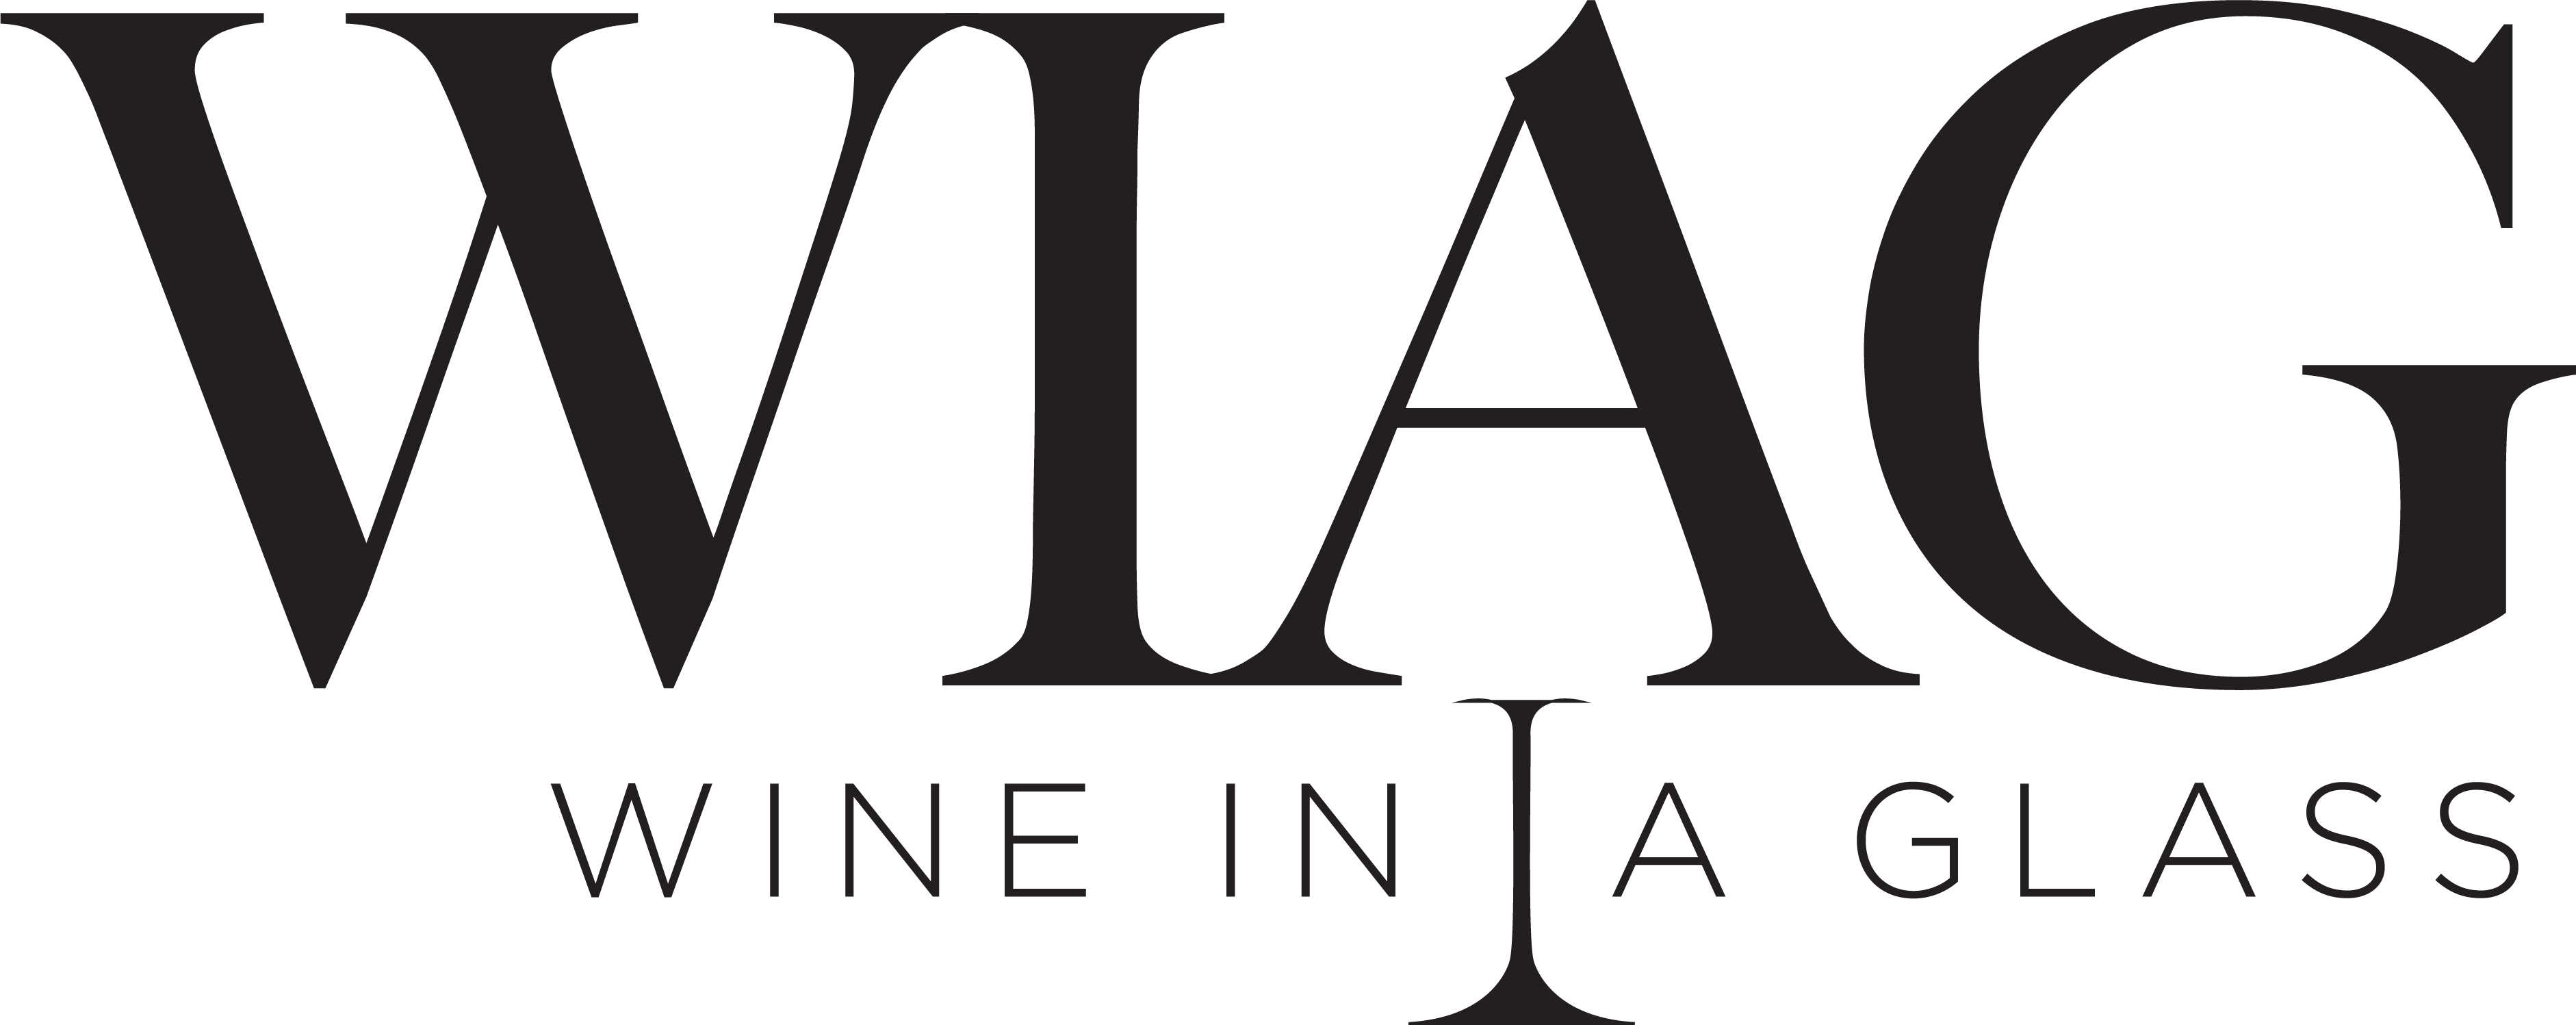 Wine in a glass logo